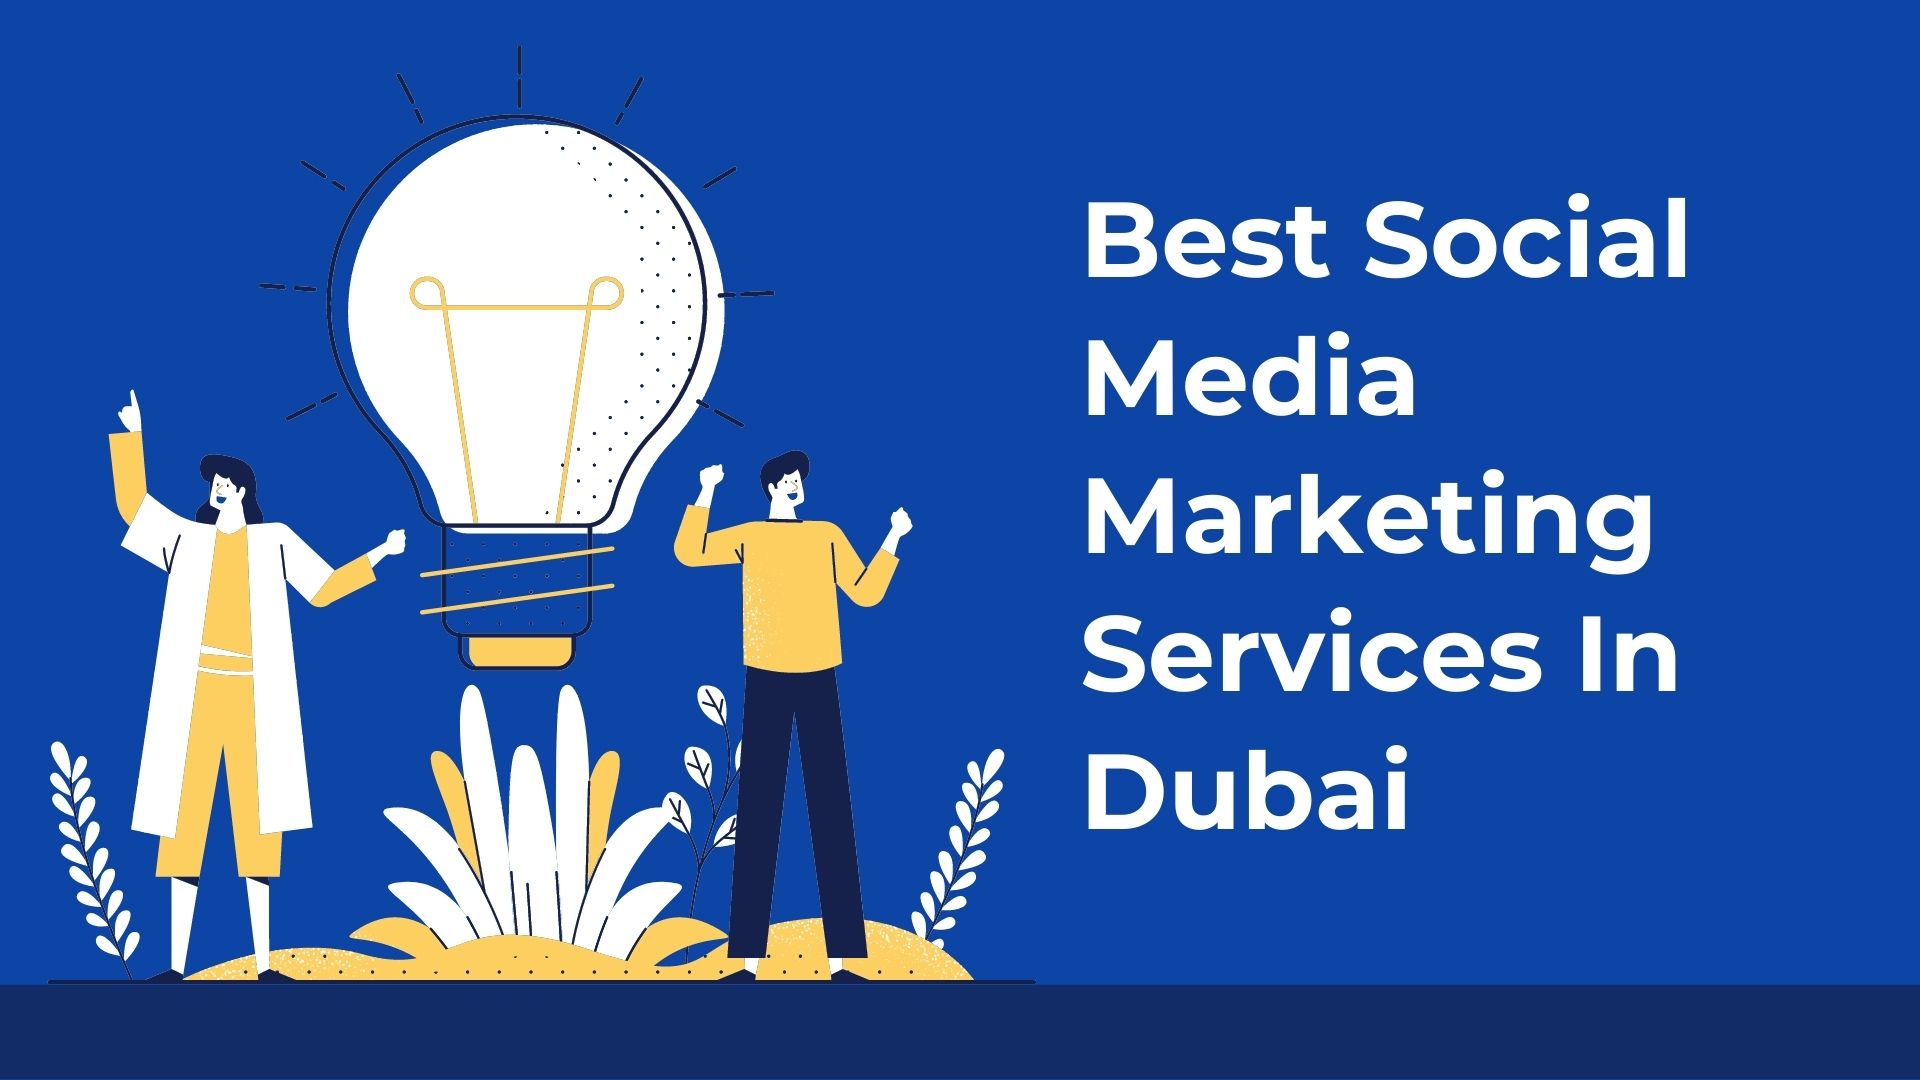 Best Social Media Marketing Services In Dubai